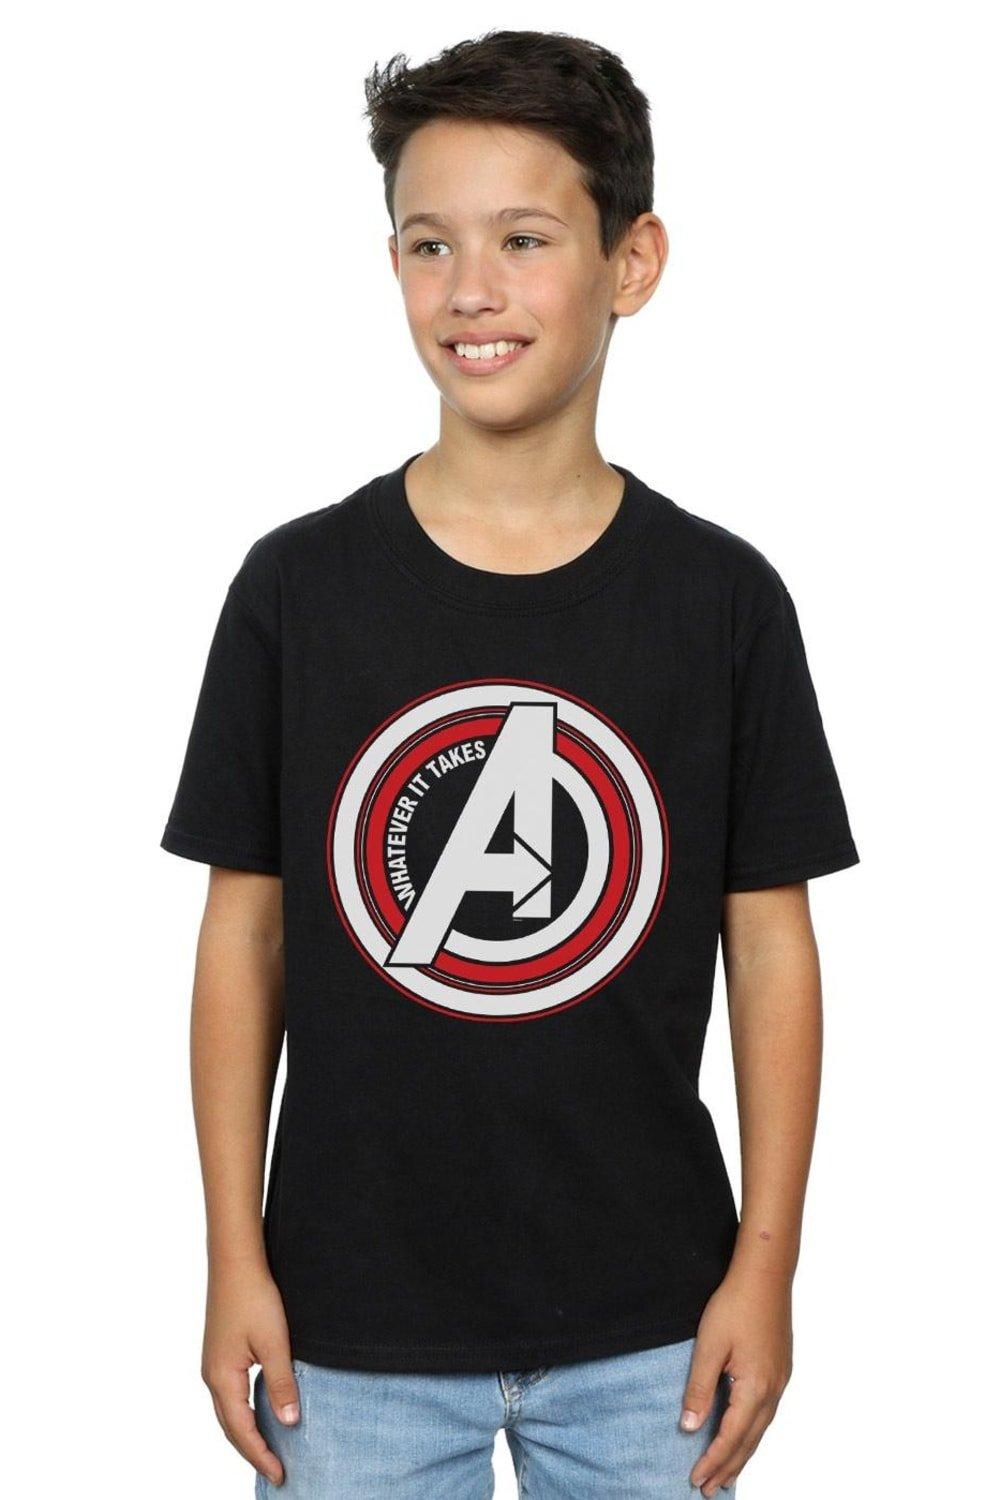 Avengers Endgame Whatever It Takes Symbol T-Shirt